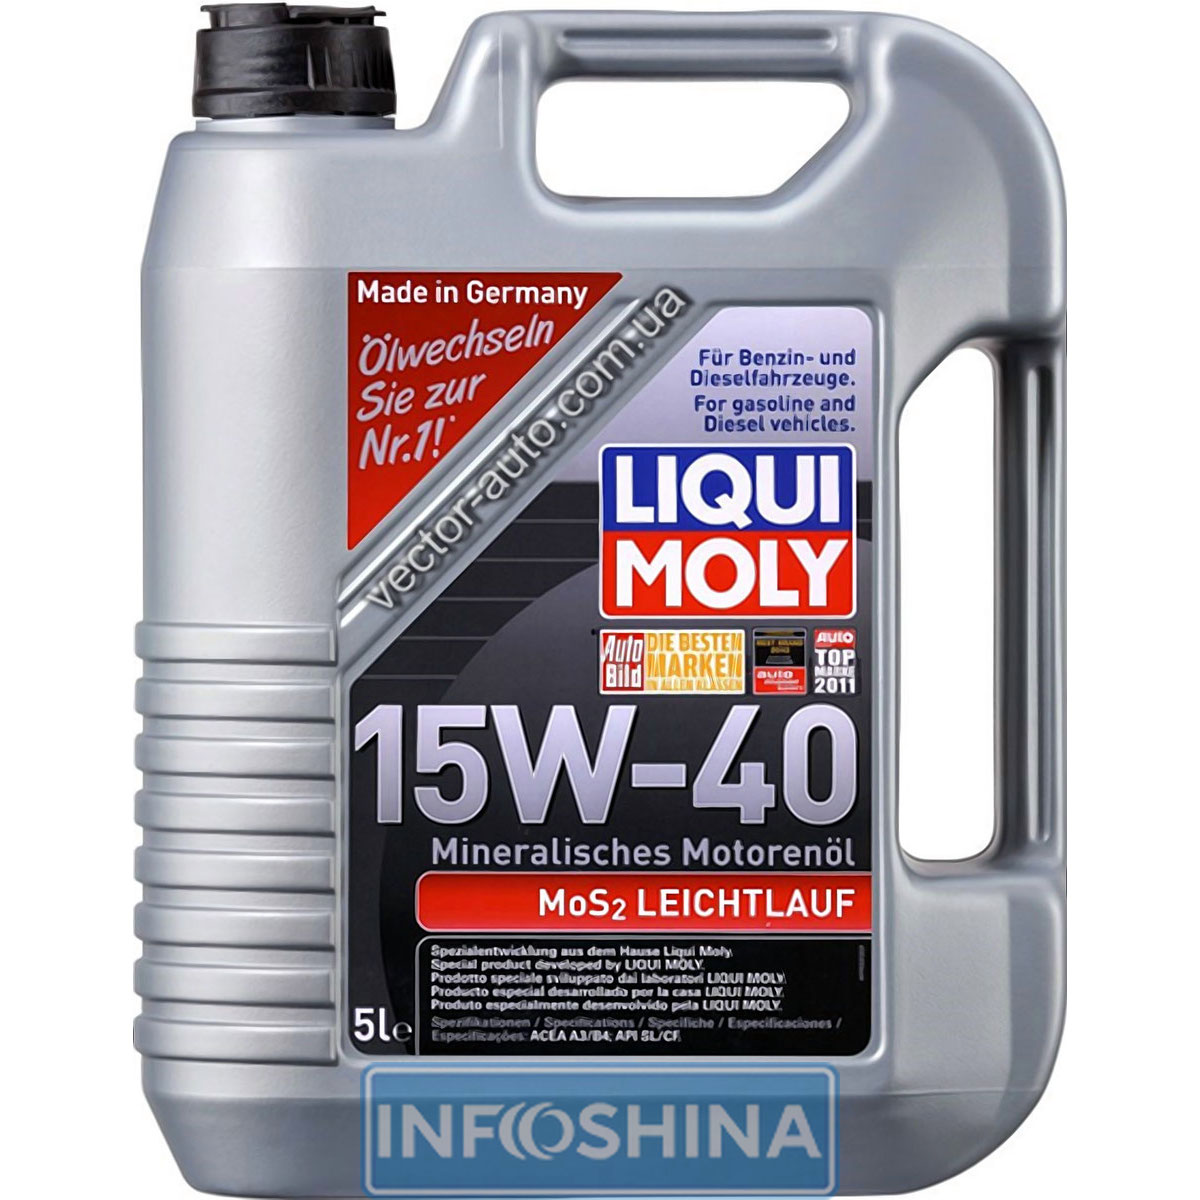 Купити масло Liqui Moly MoS2 Leichtlauf 15W-40 (5л)